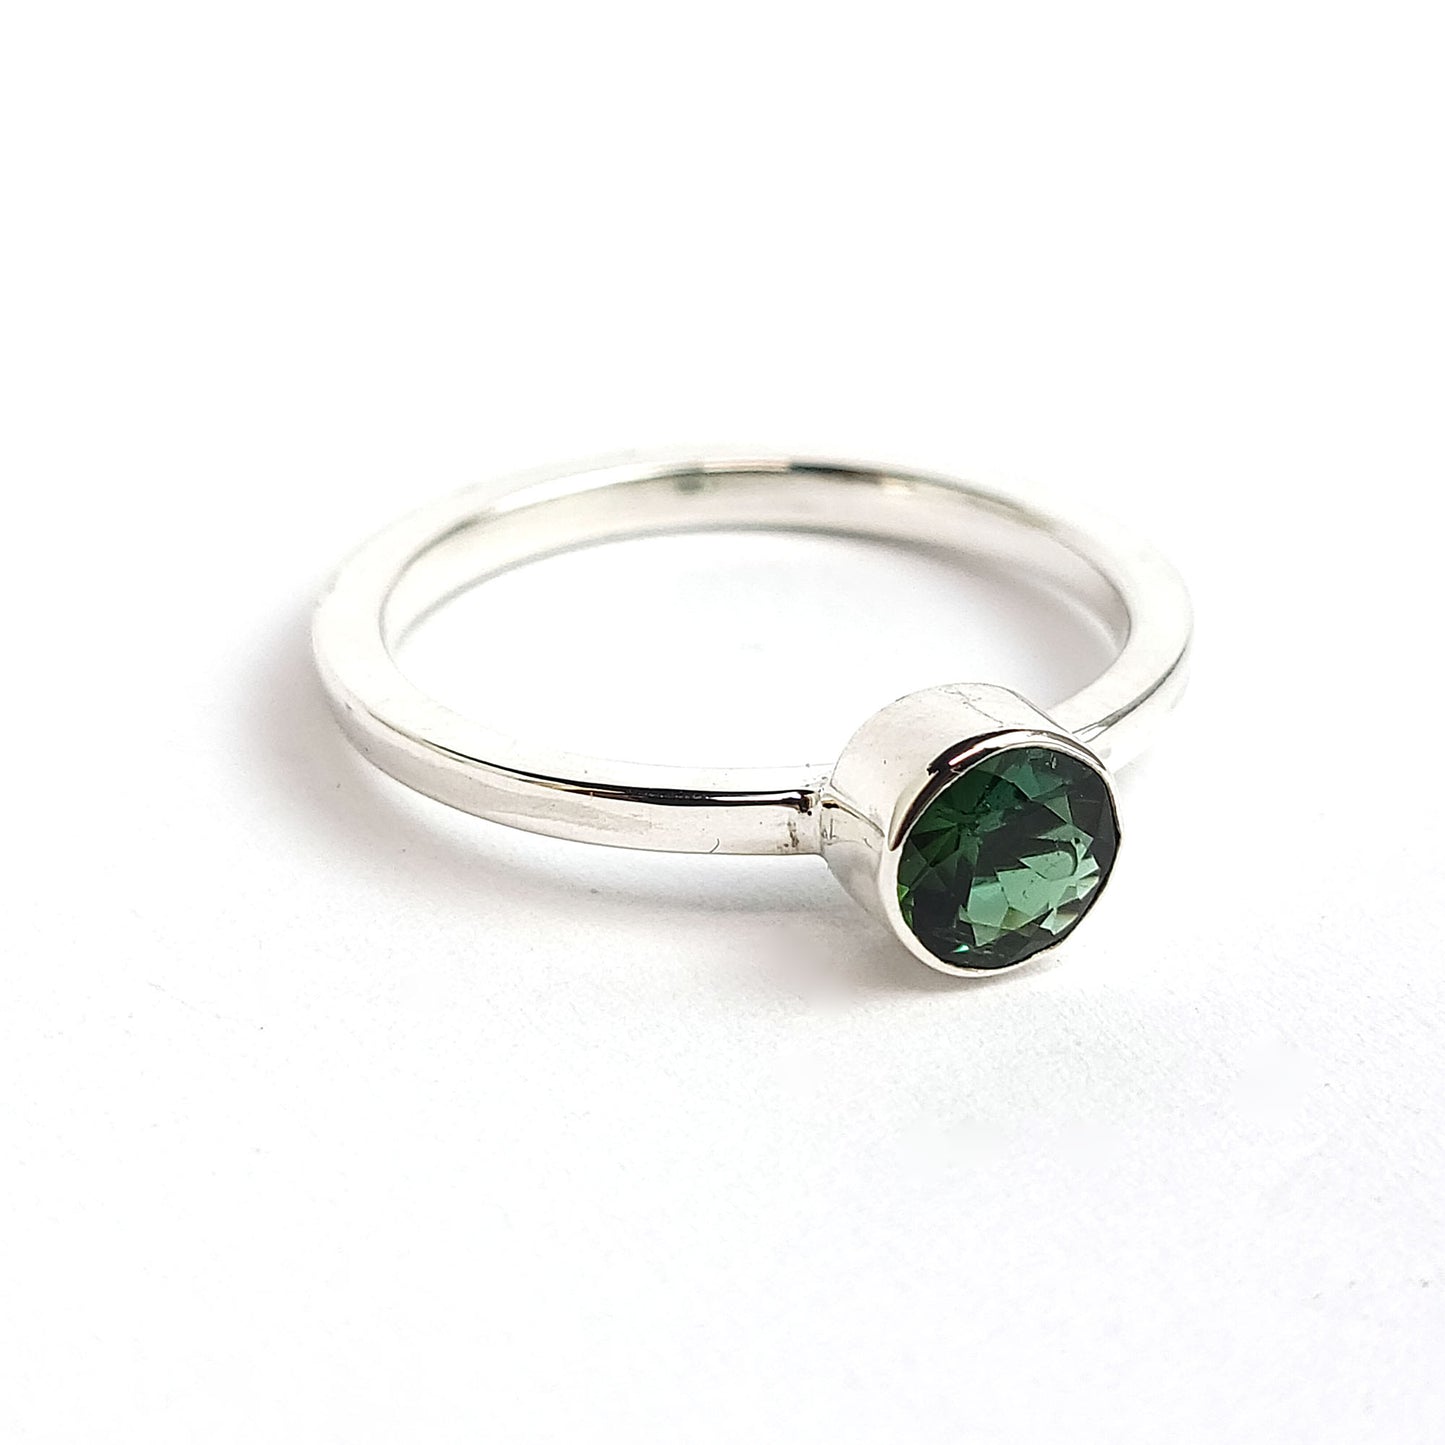 Bezel Sterling Silver Ring - green tourmaline